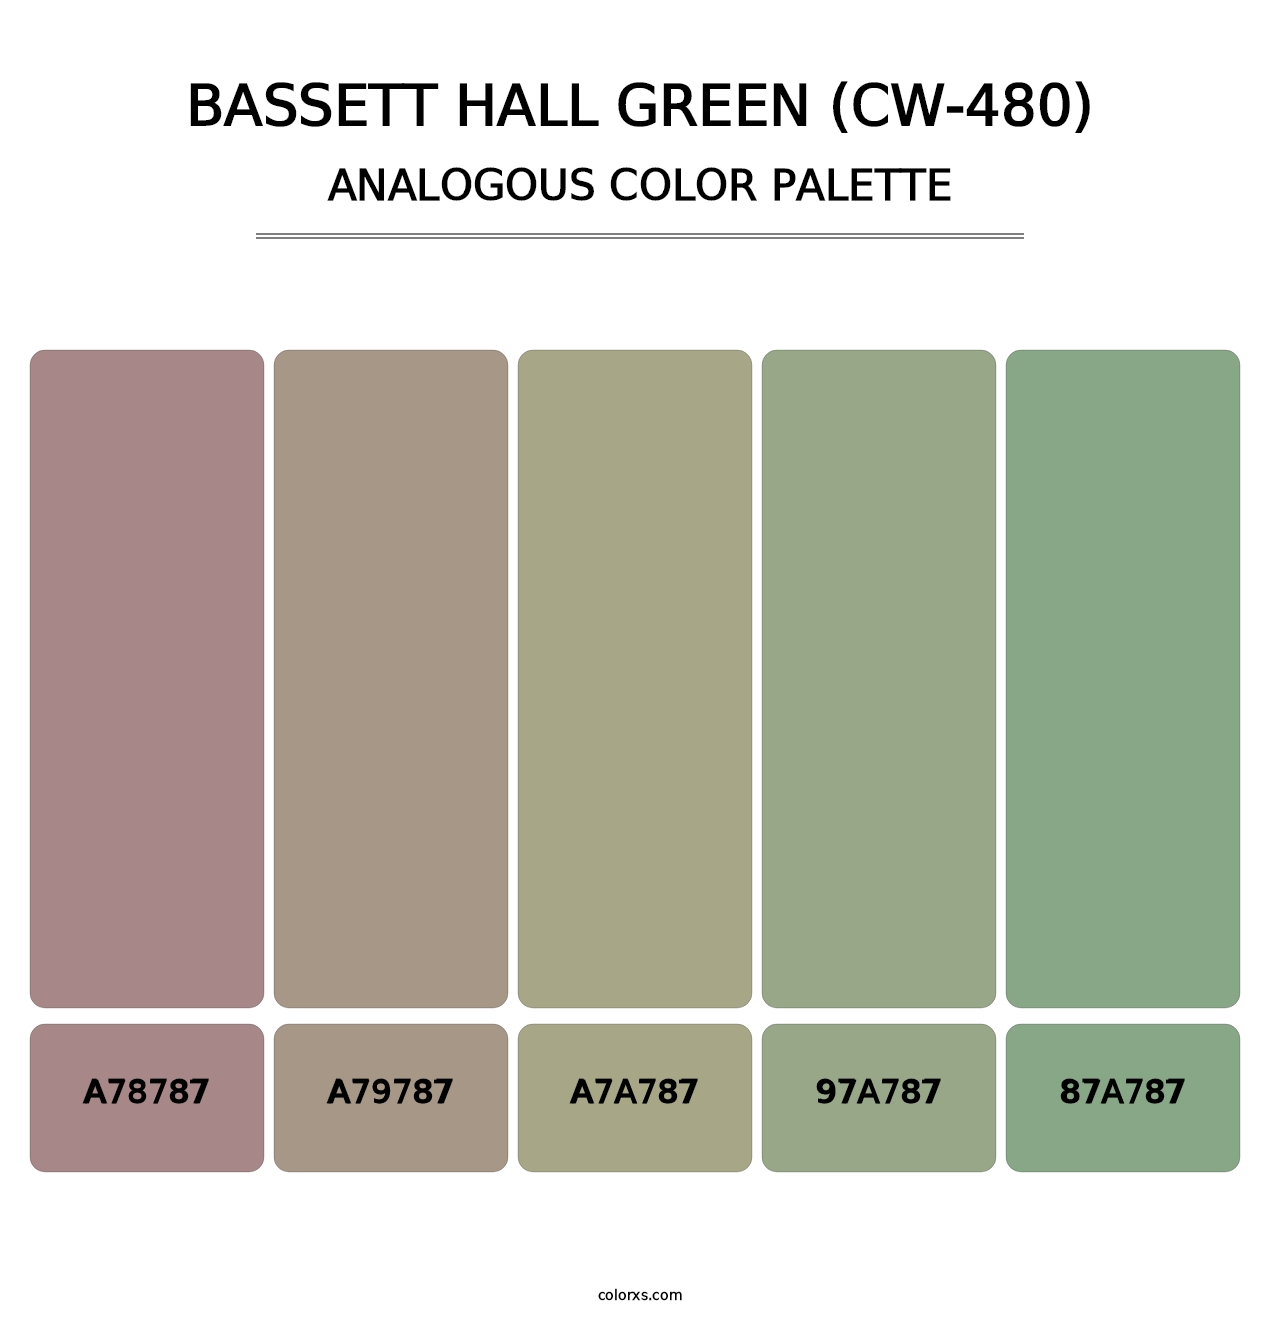 Bassett Hall Green (CW-480) - Analogous Color Palette